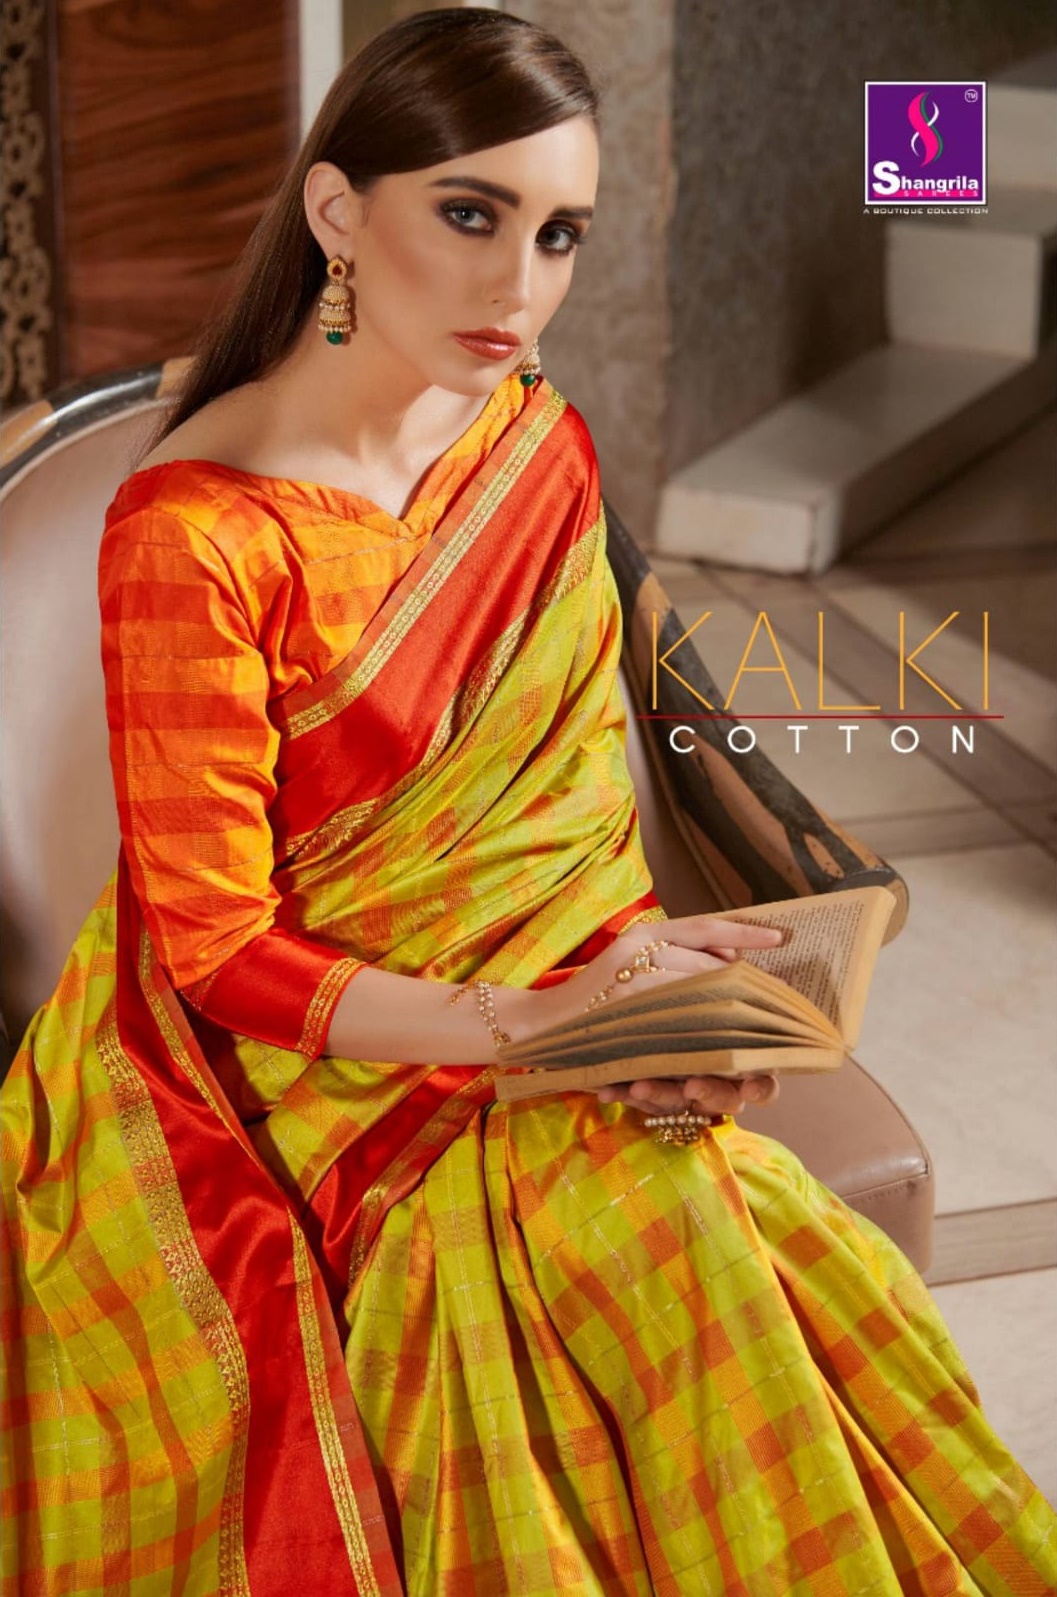 Shangrila Sarees Kalki Cotton Checks Printed Weaving Sarees ...